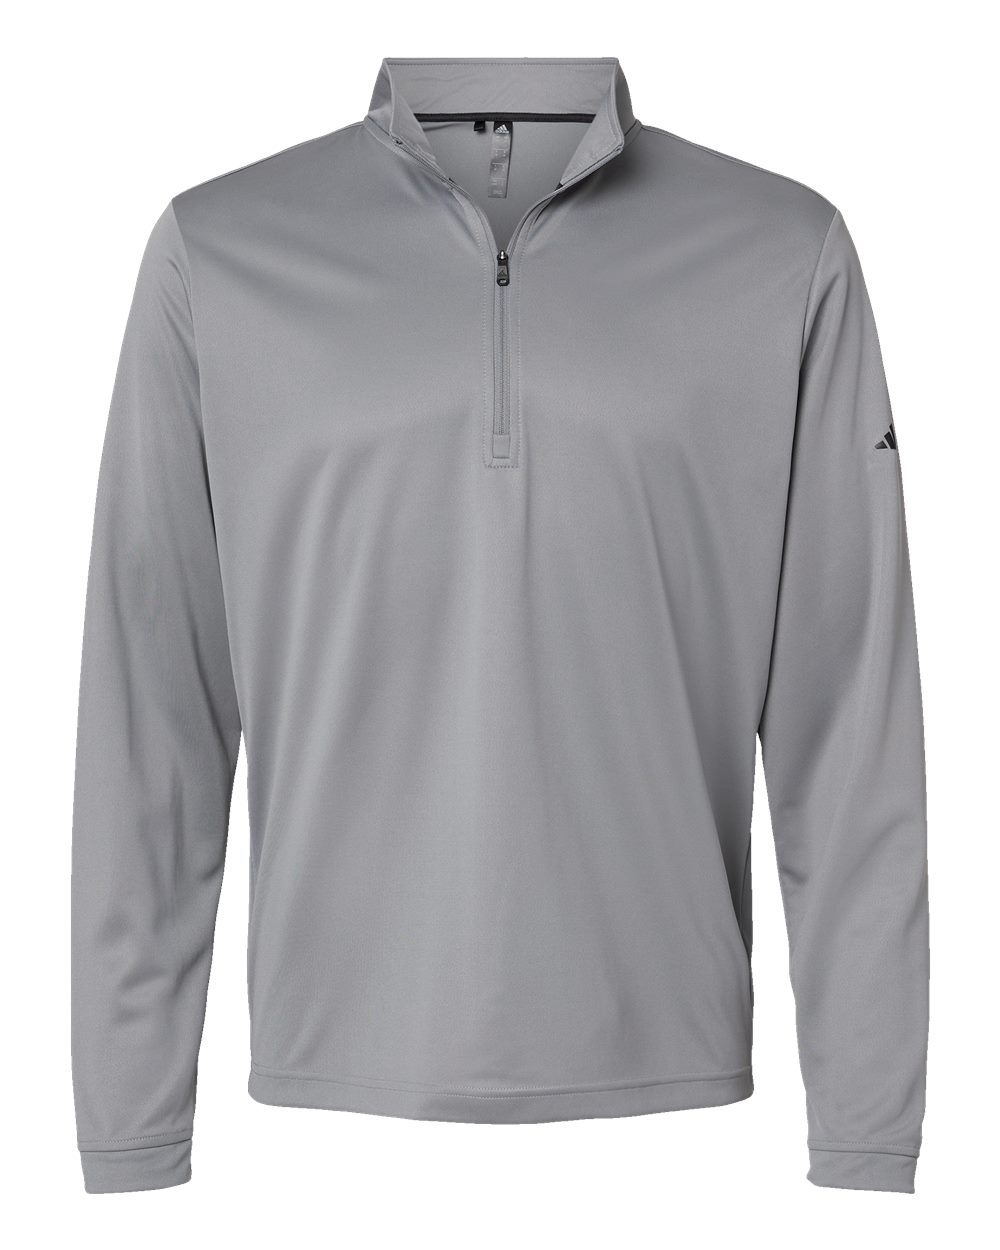 Adidas Mens Lightweight Quarter-Zip Pullover Shirt polyester A401 up to